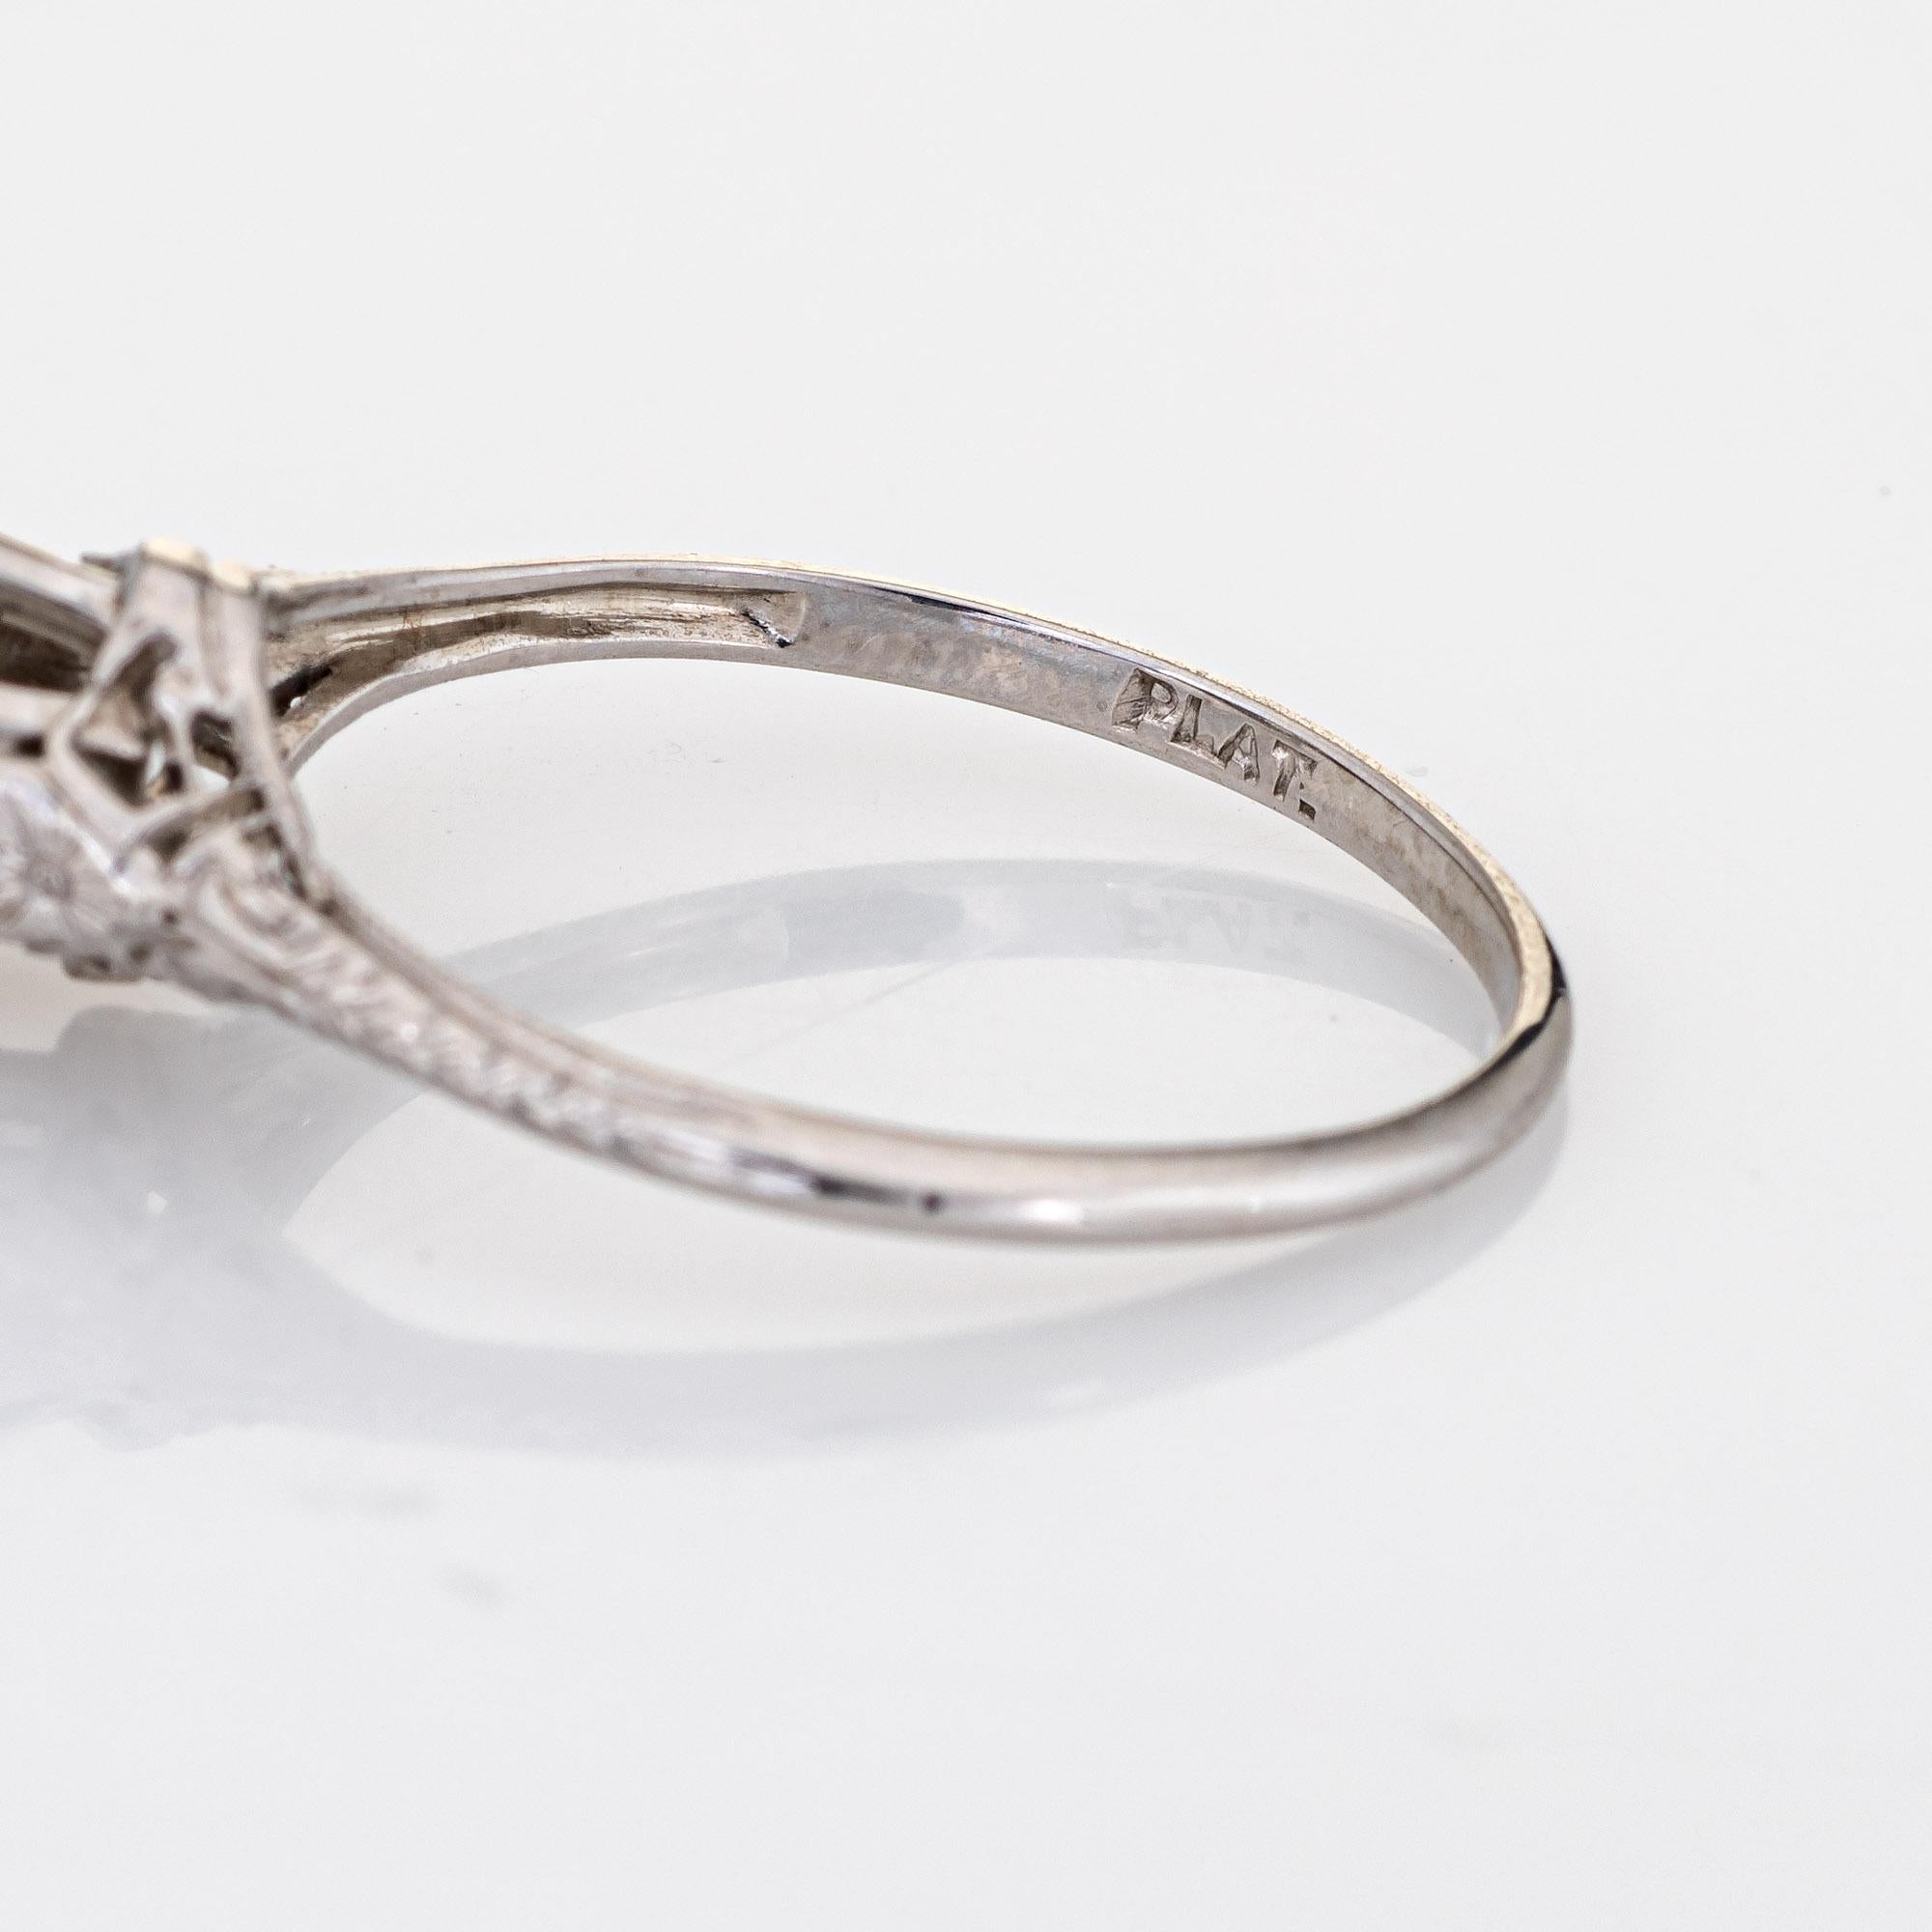 Vintage Art Deco GIA 1.55ct Diamond Ring Engagement Platinum Jewelry For Sale 2